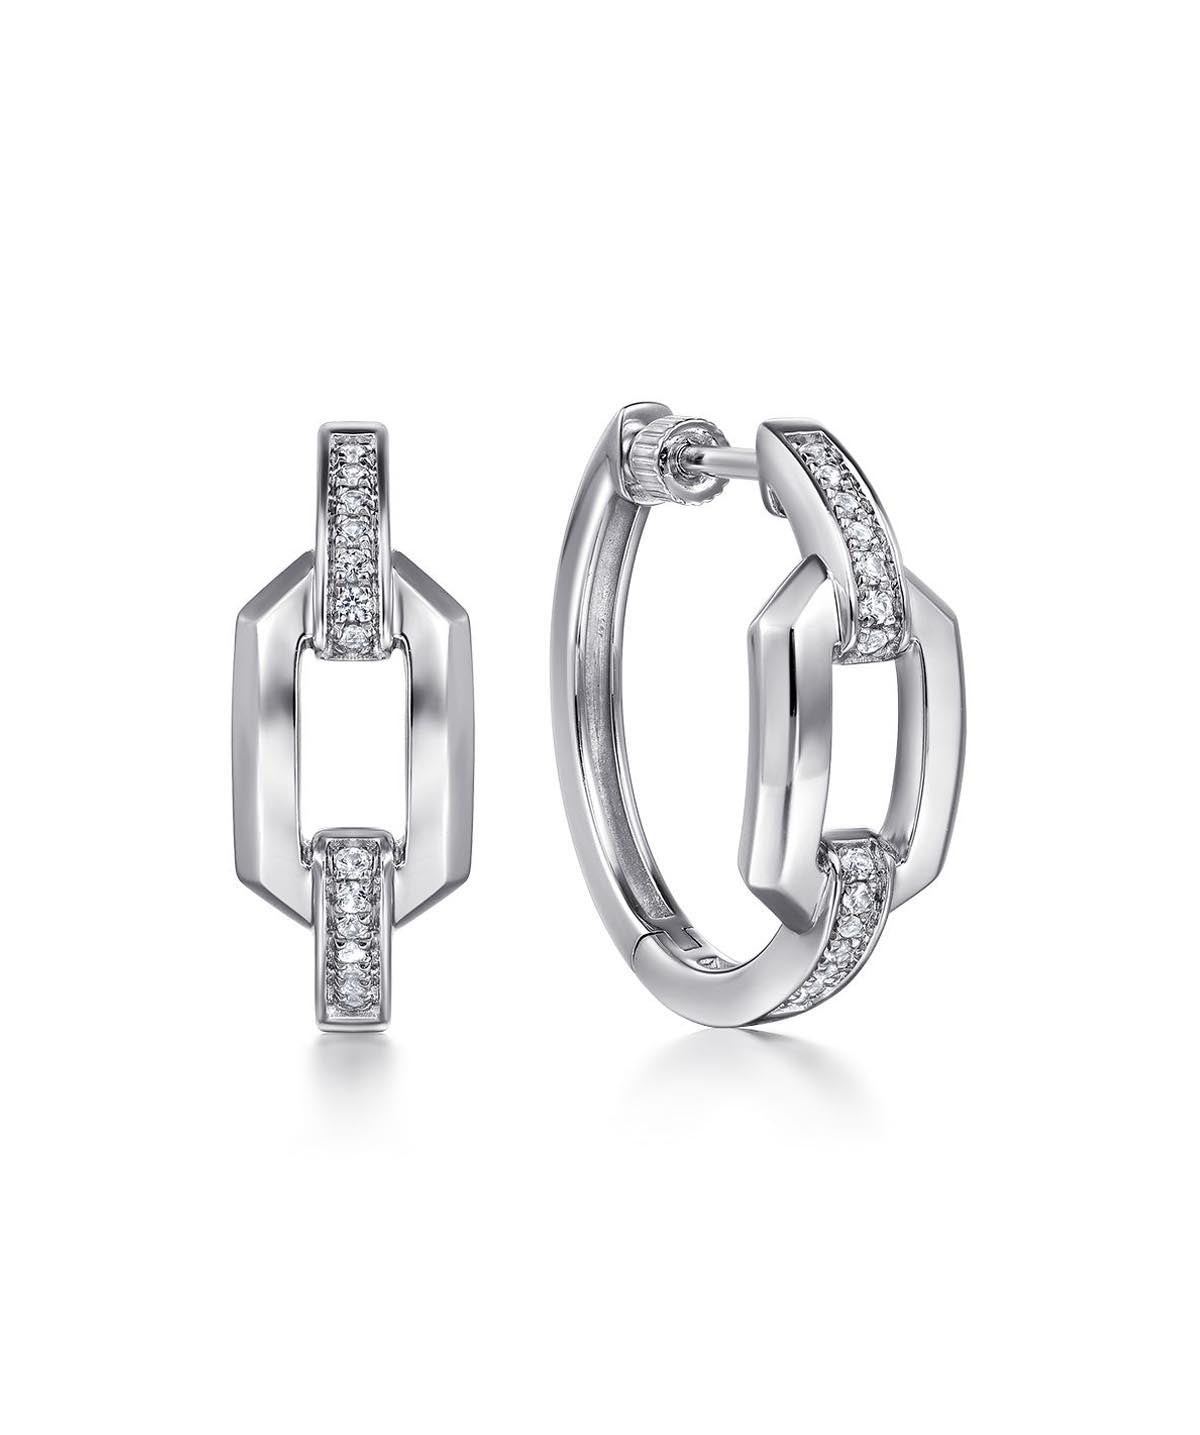 925 Sterling Silver White Sapphire Link Chain Hoop Earrings